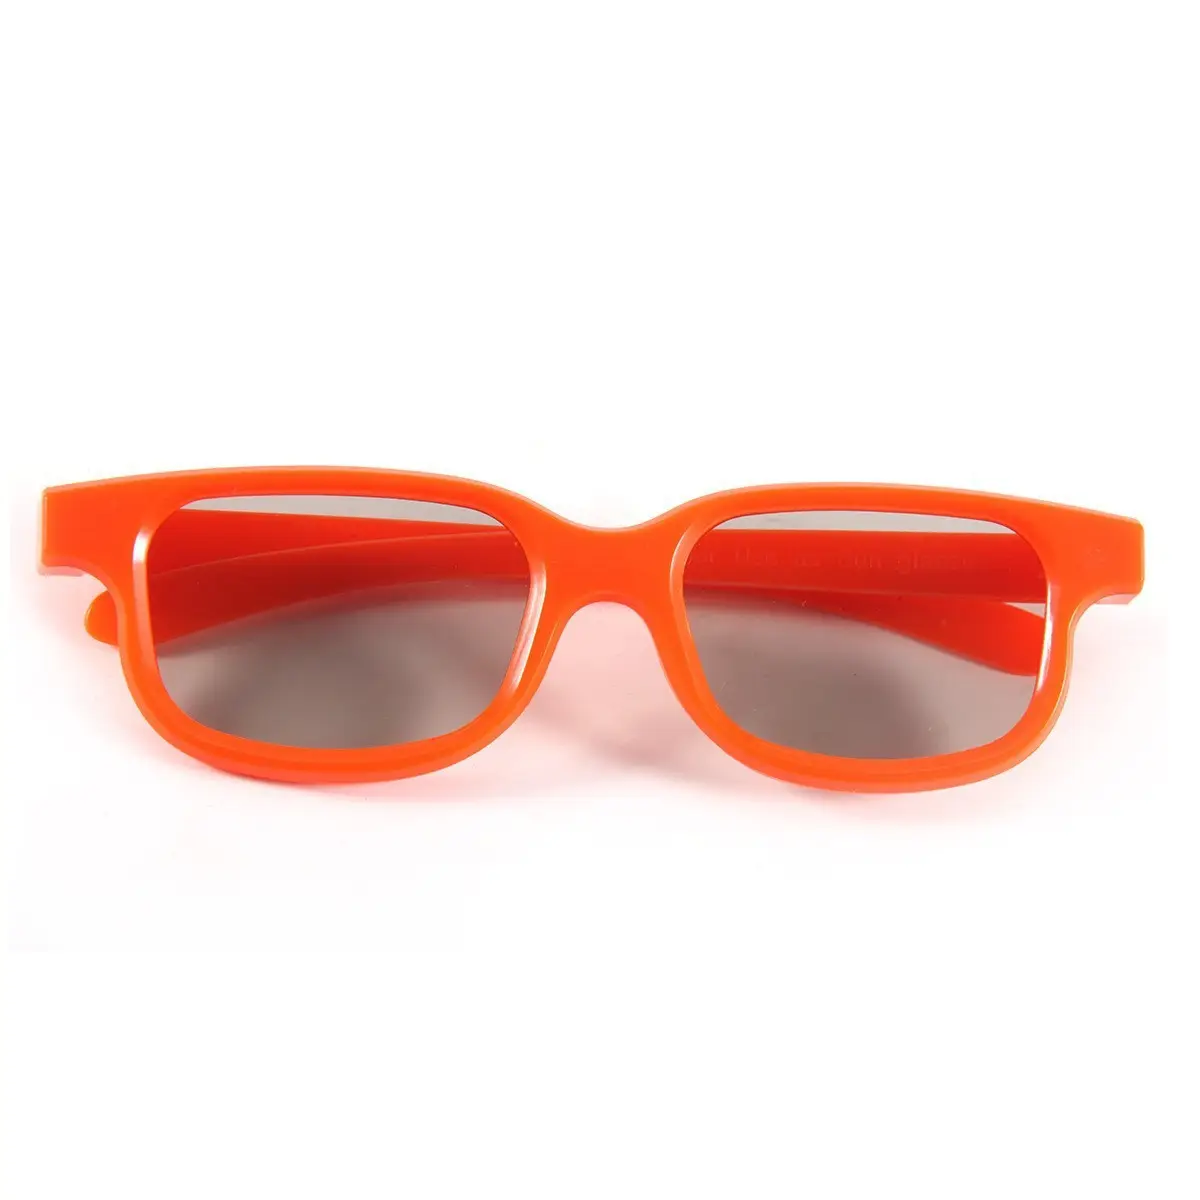 New passive non-flash circular polarized 3D stereoscopic glasses comfortable adult frame cinema 3D glasses